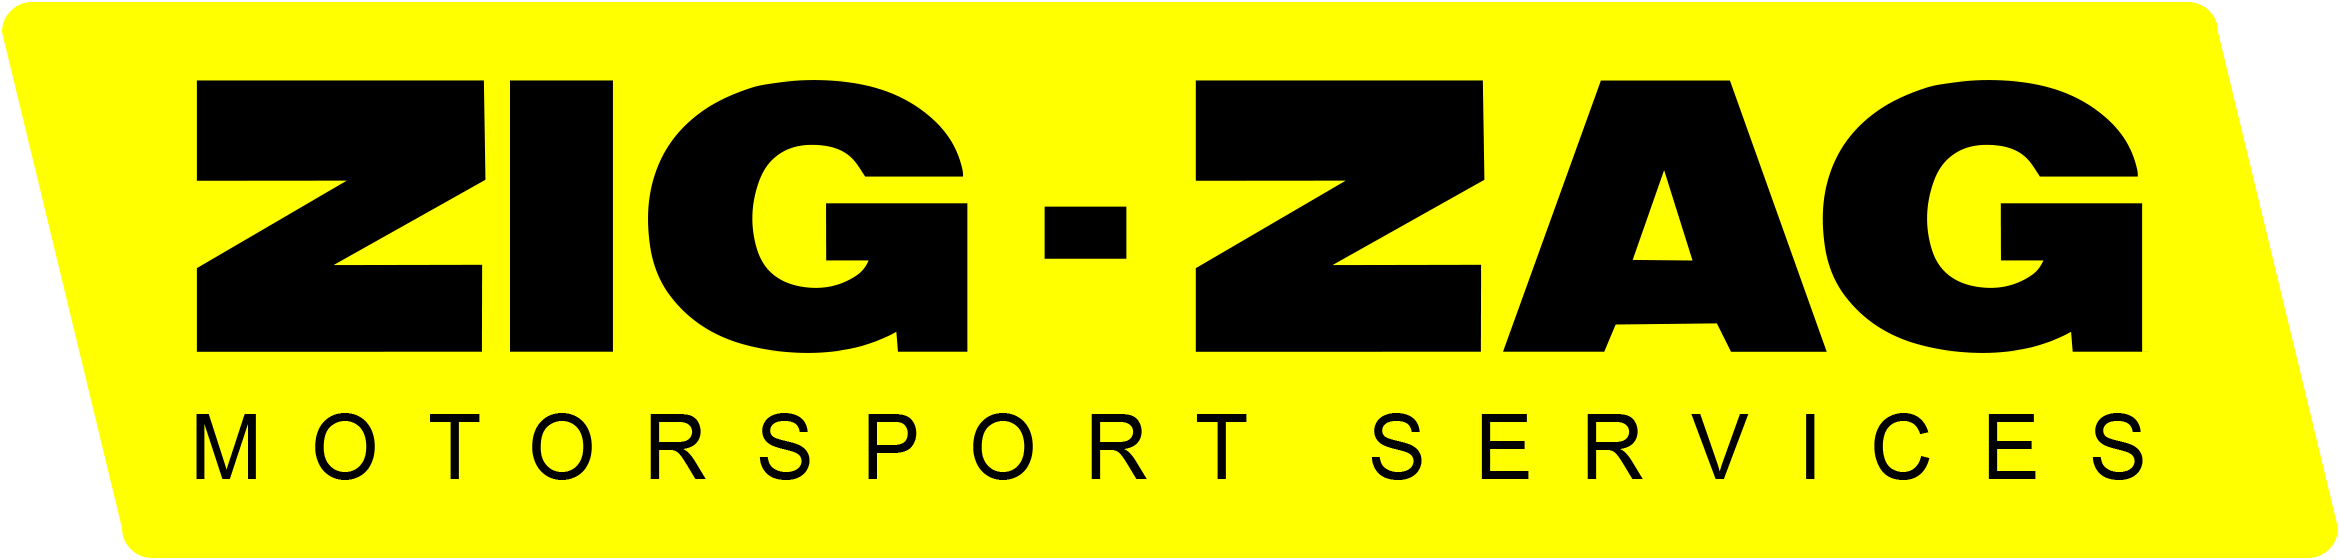 Zig-Zag Motorsport Services